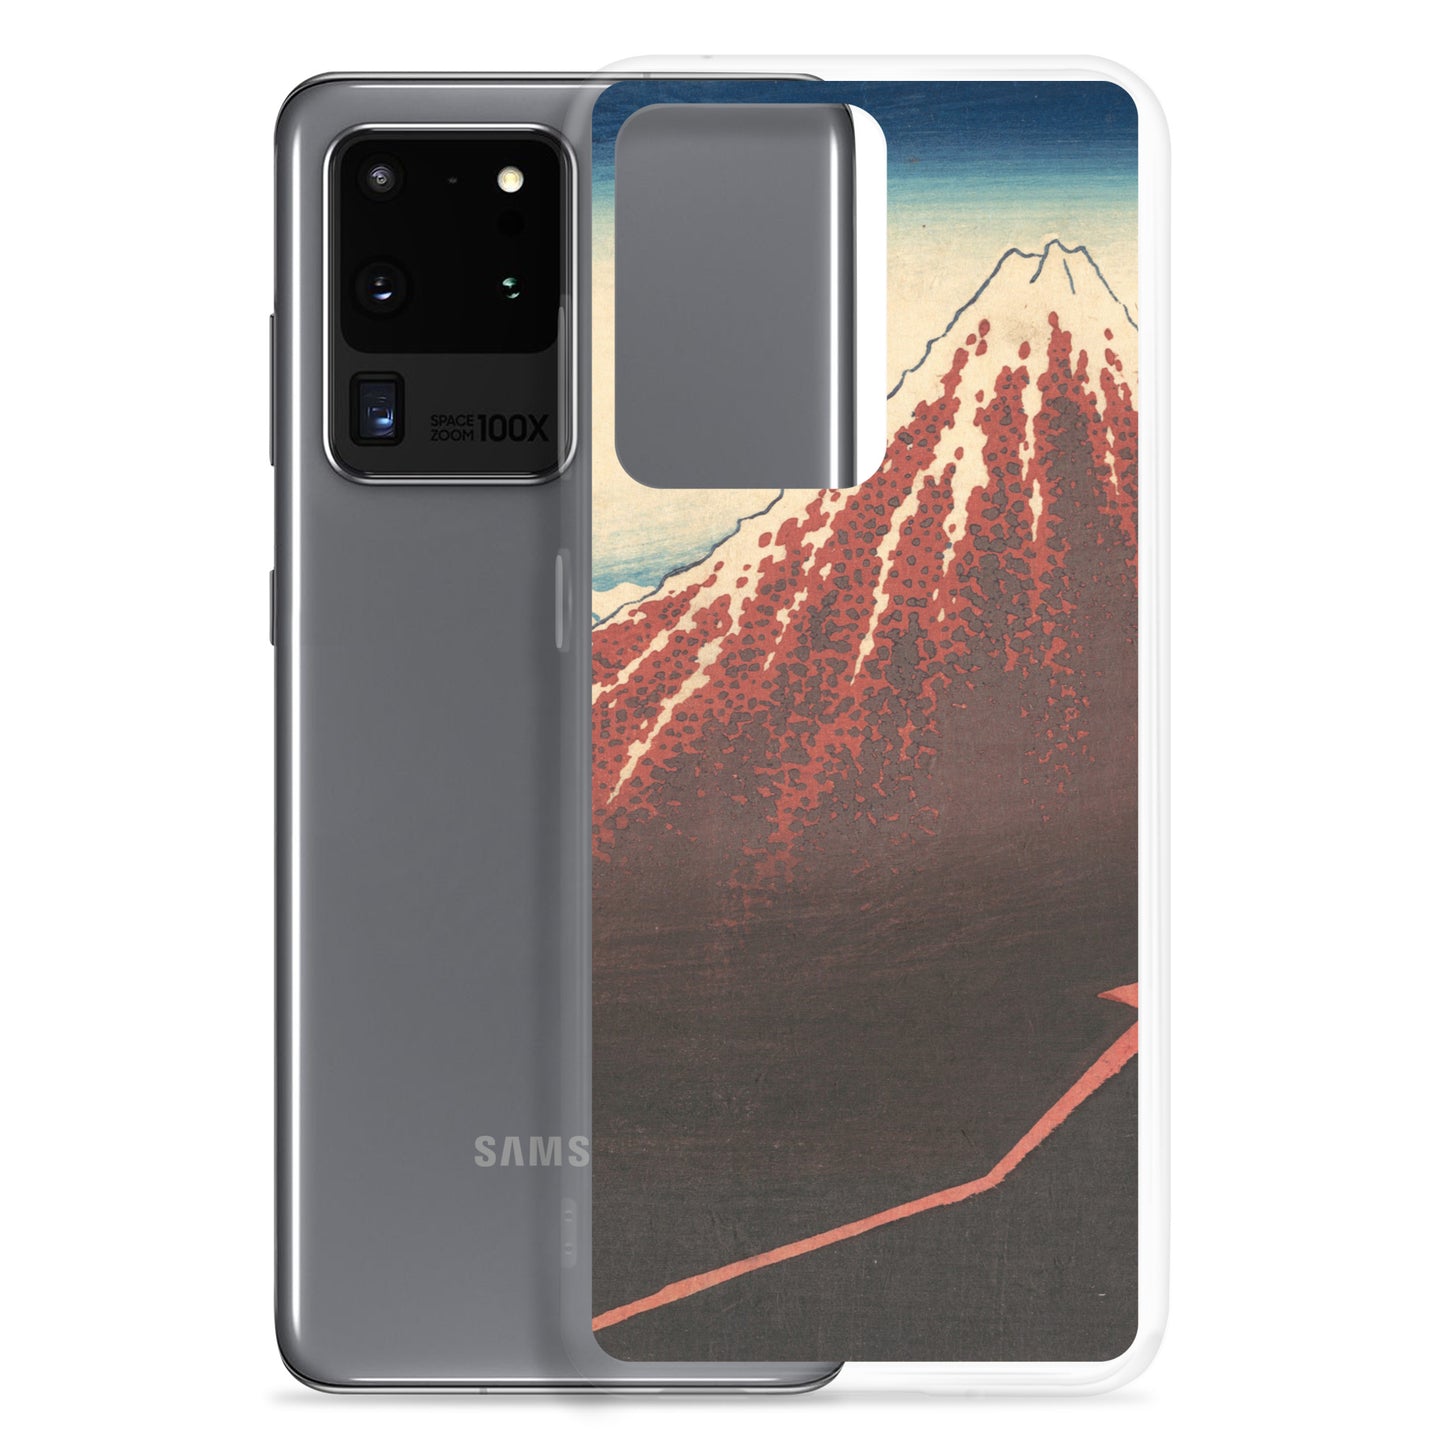 Samsung Galaxy Case Sanka Hakuu B [Fugaku Sanjurokkei]